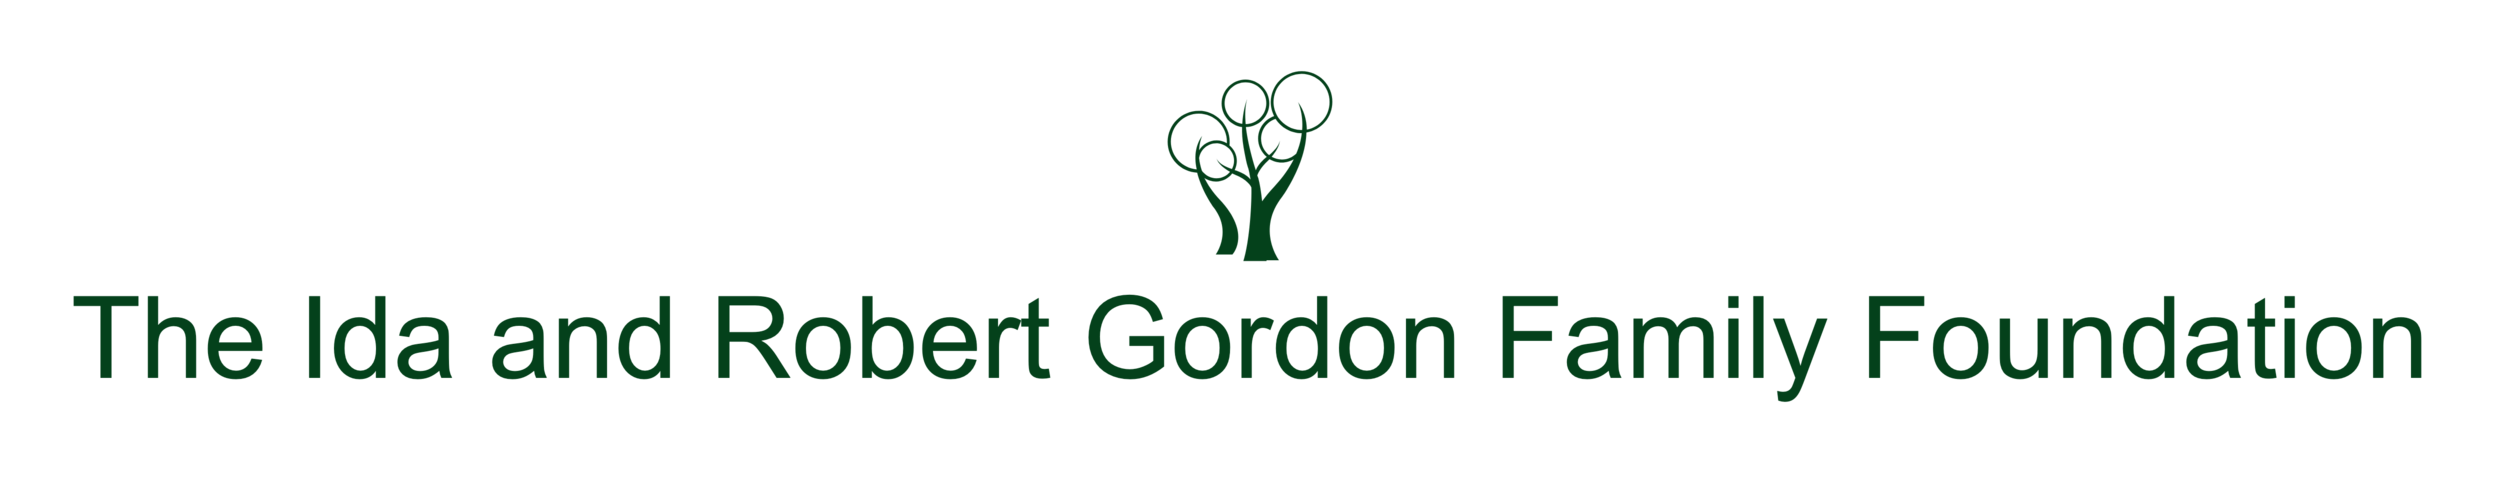 The Ida and Robert Gordon Family Foundation